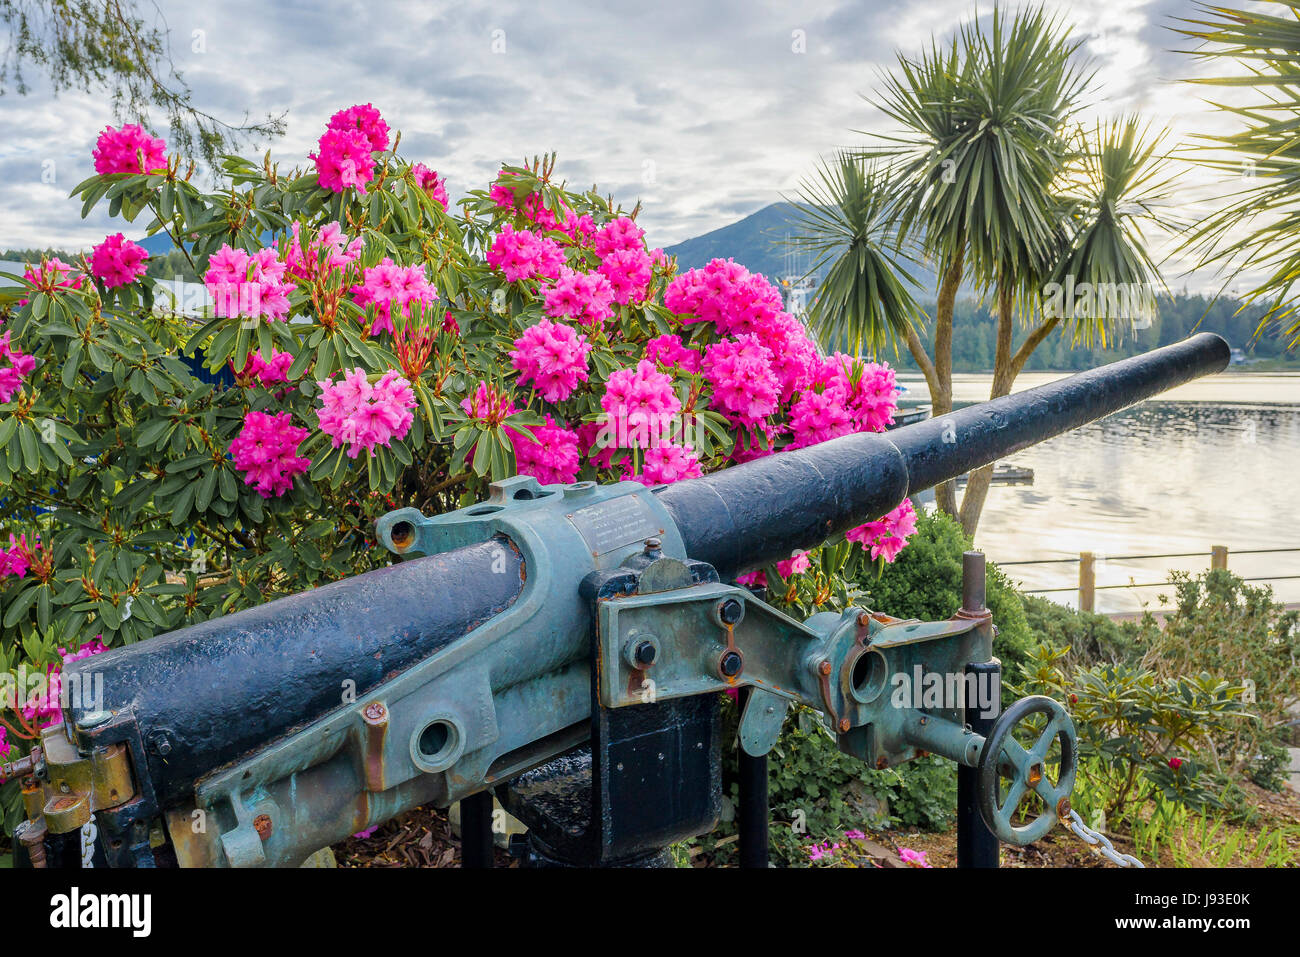 Thiepval cannon, 12 pounder gun, Ucluelet, Vancouver Island, British Columbia, Canada. Stock Photo